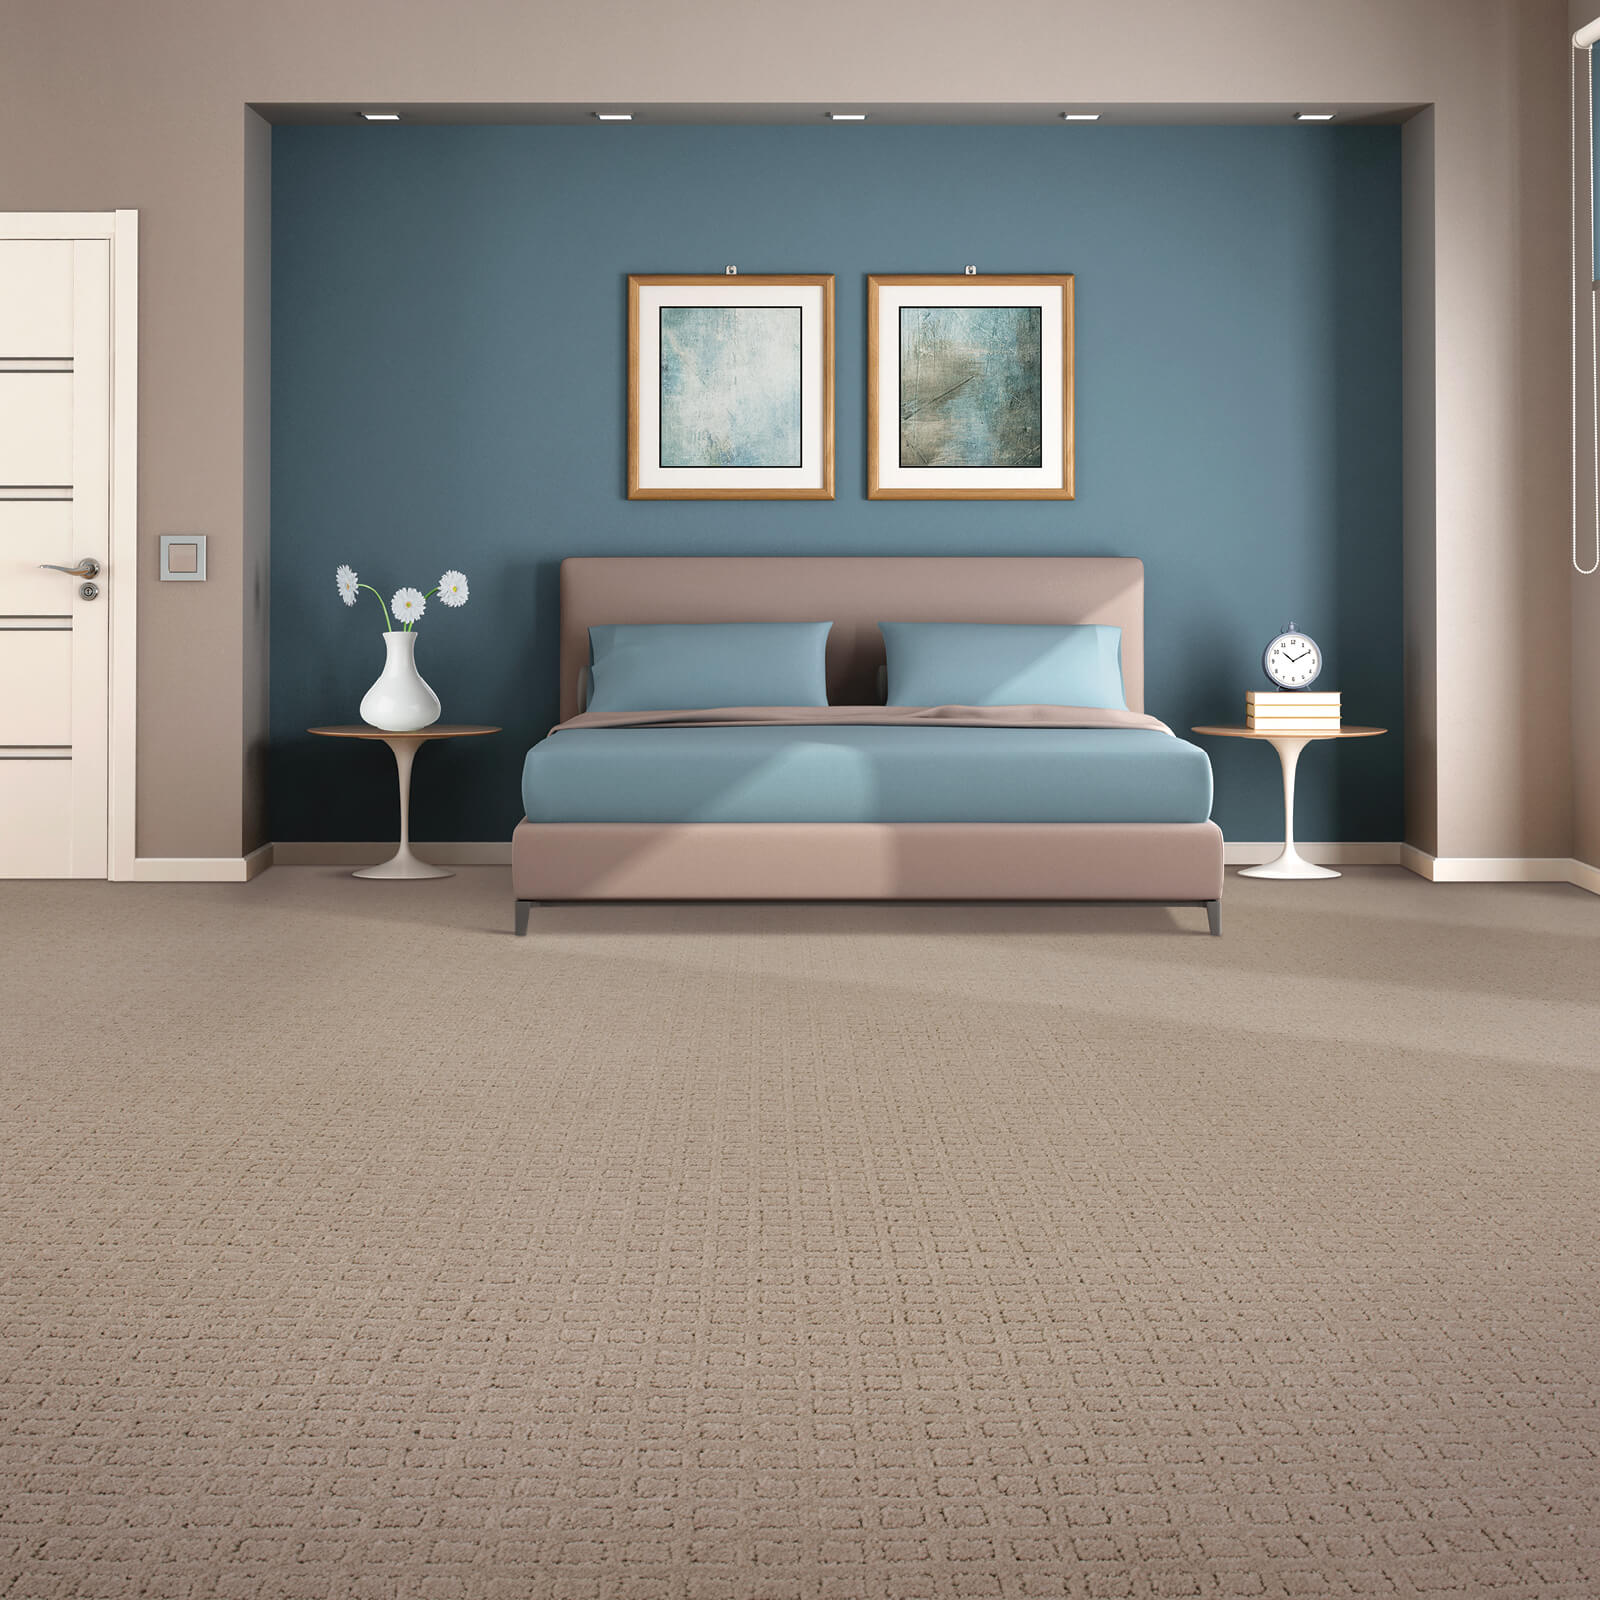 Carpet flooring in bedroom | Buckway Flooring